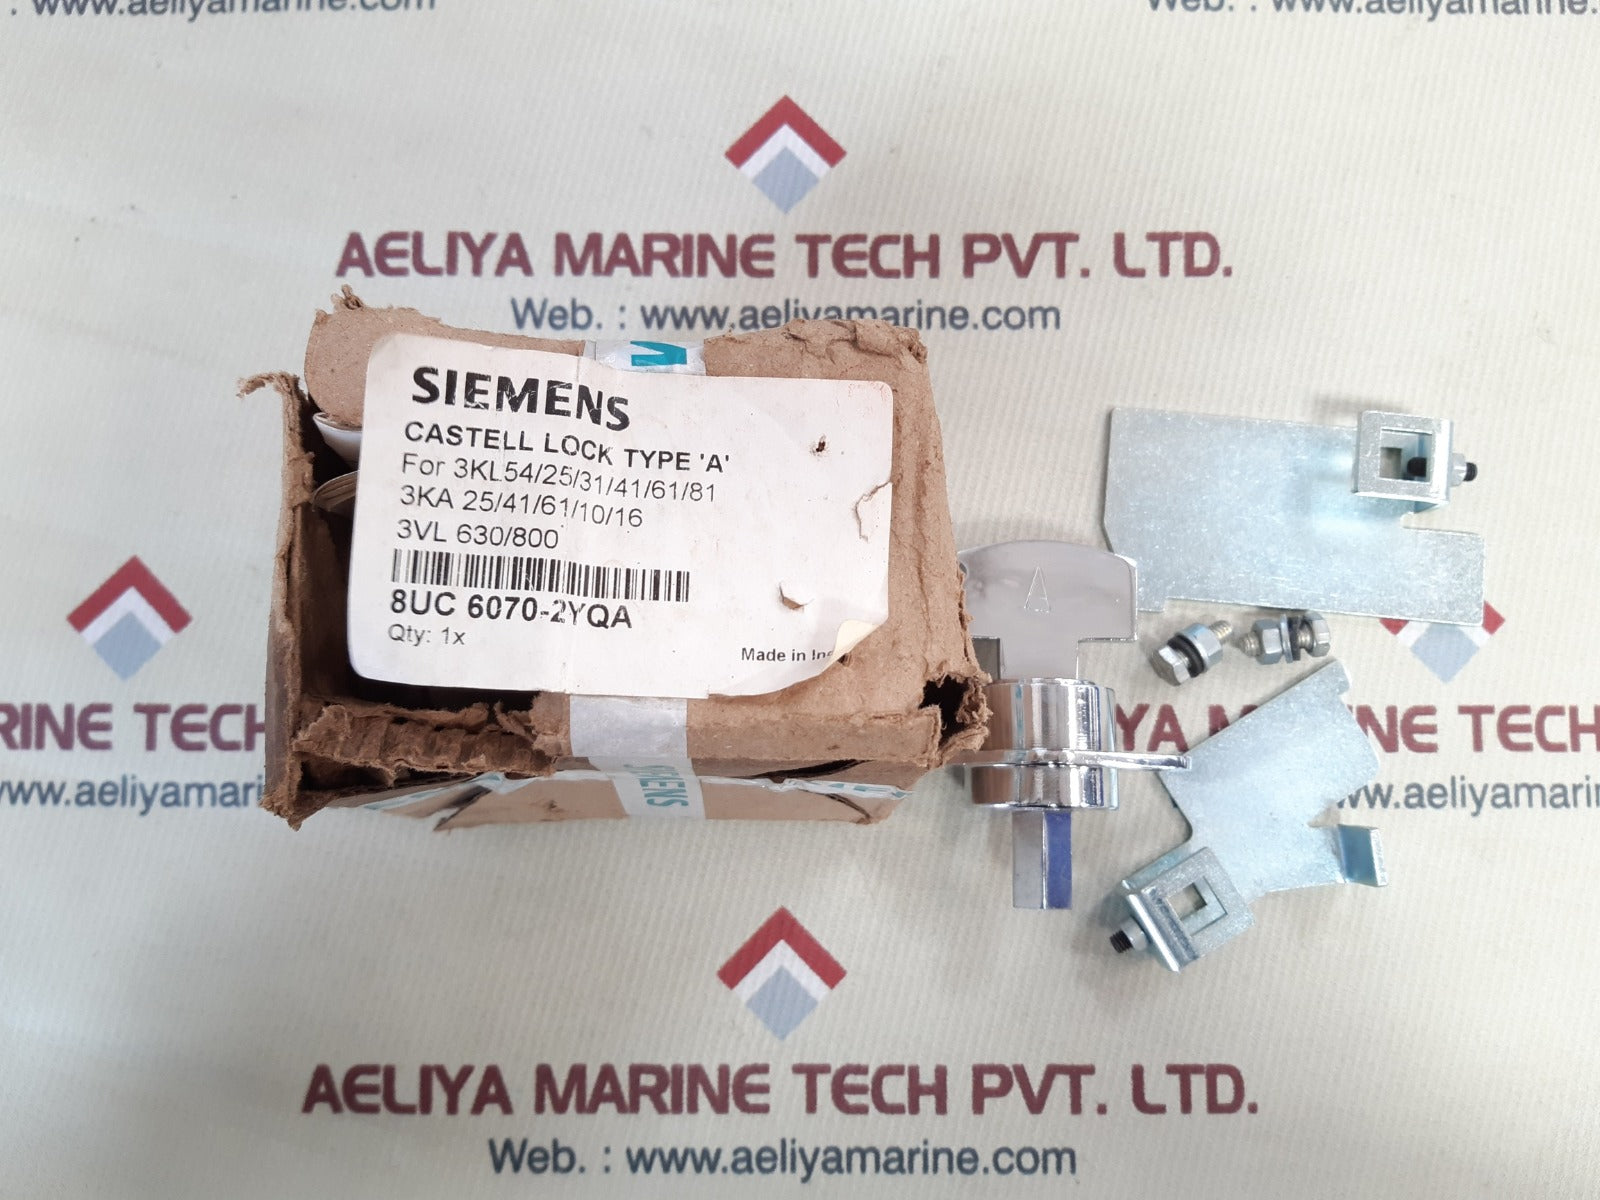 Siemens castell lock type'a' 8uc 6070-2yqa